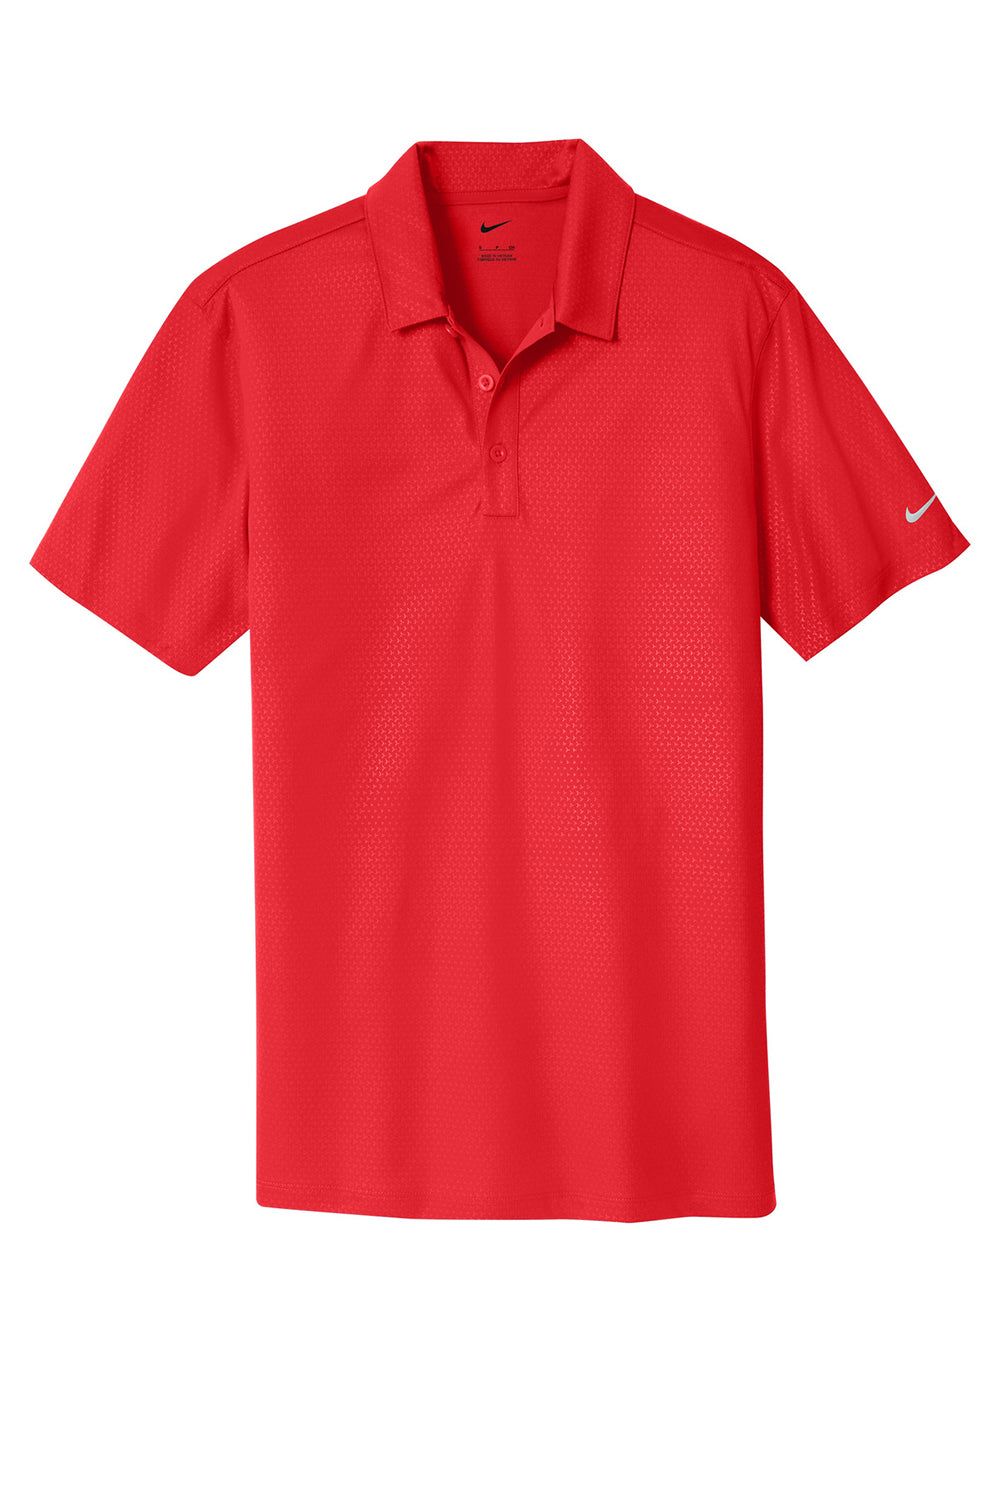 Nike 838964 Mens Dri-Fit Moisture Wicking Short Sleeve Polo Shirt University Red Flat Front